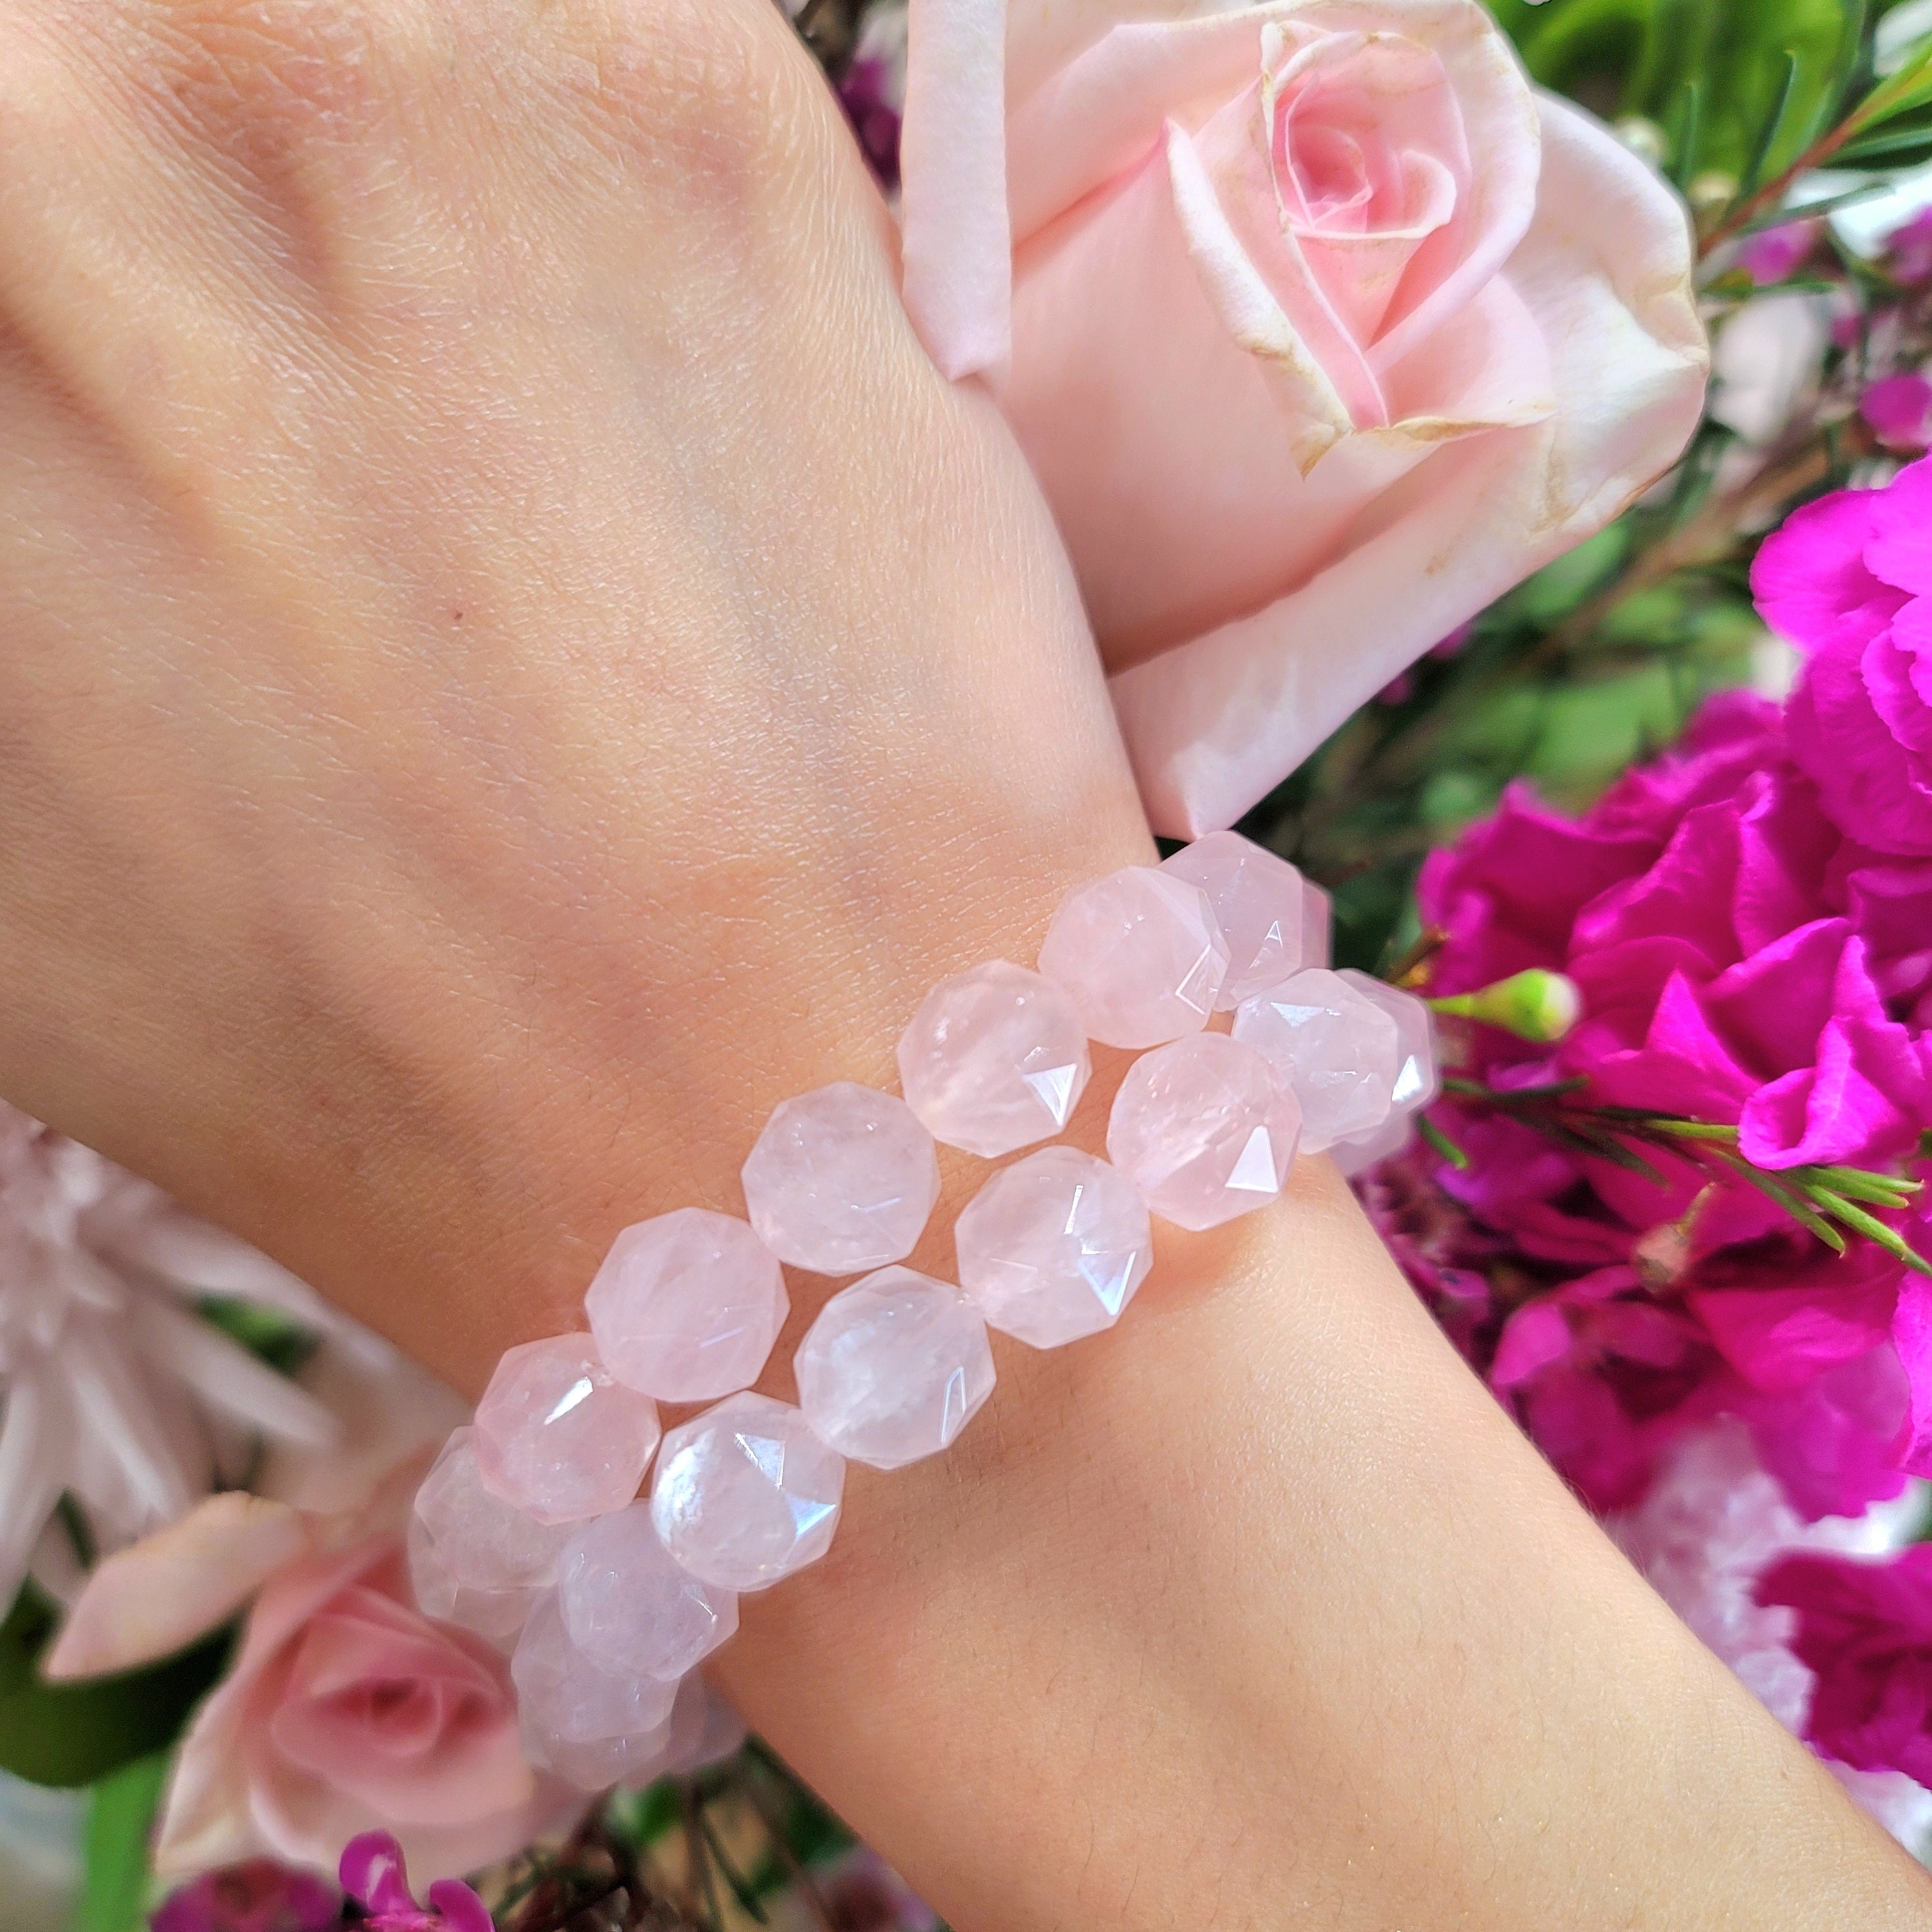 Rose Quartz Star Faceted Bracelet for Opening Your Heart to Love